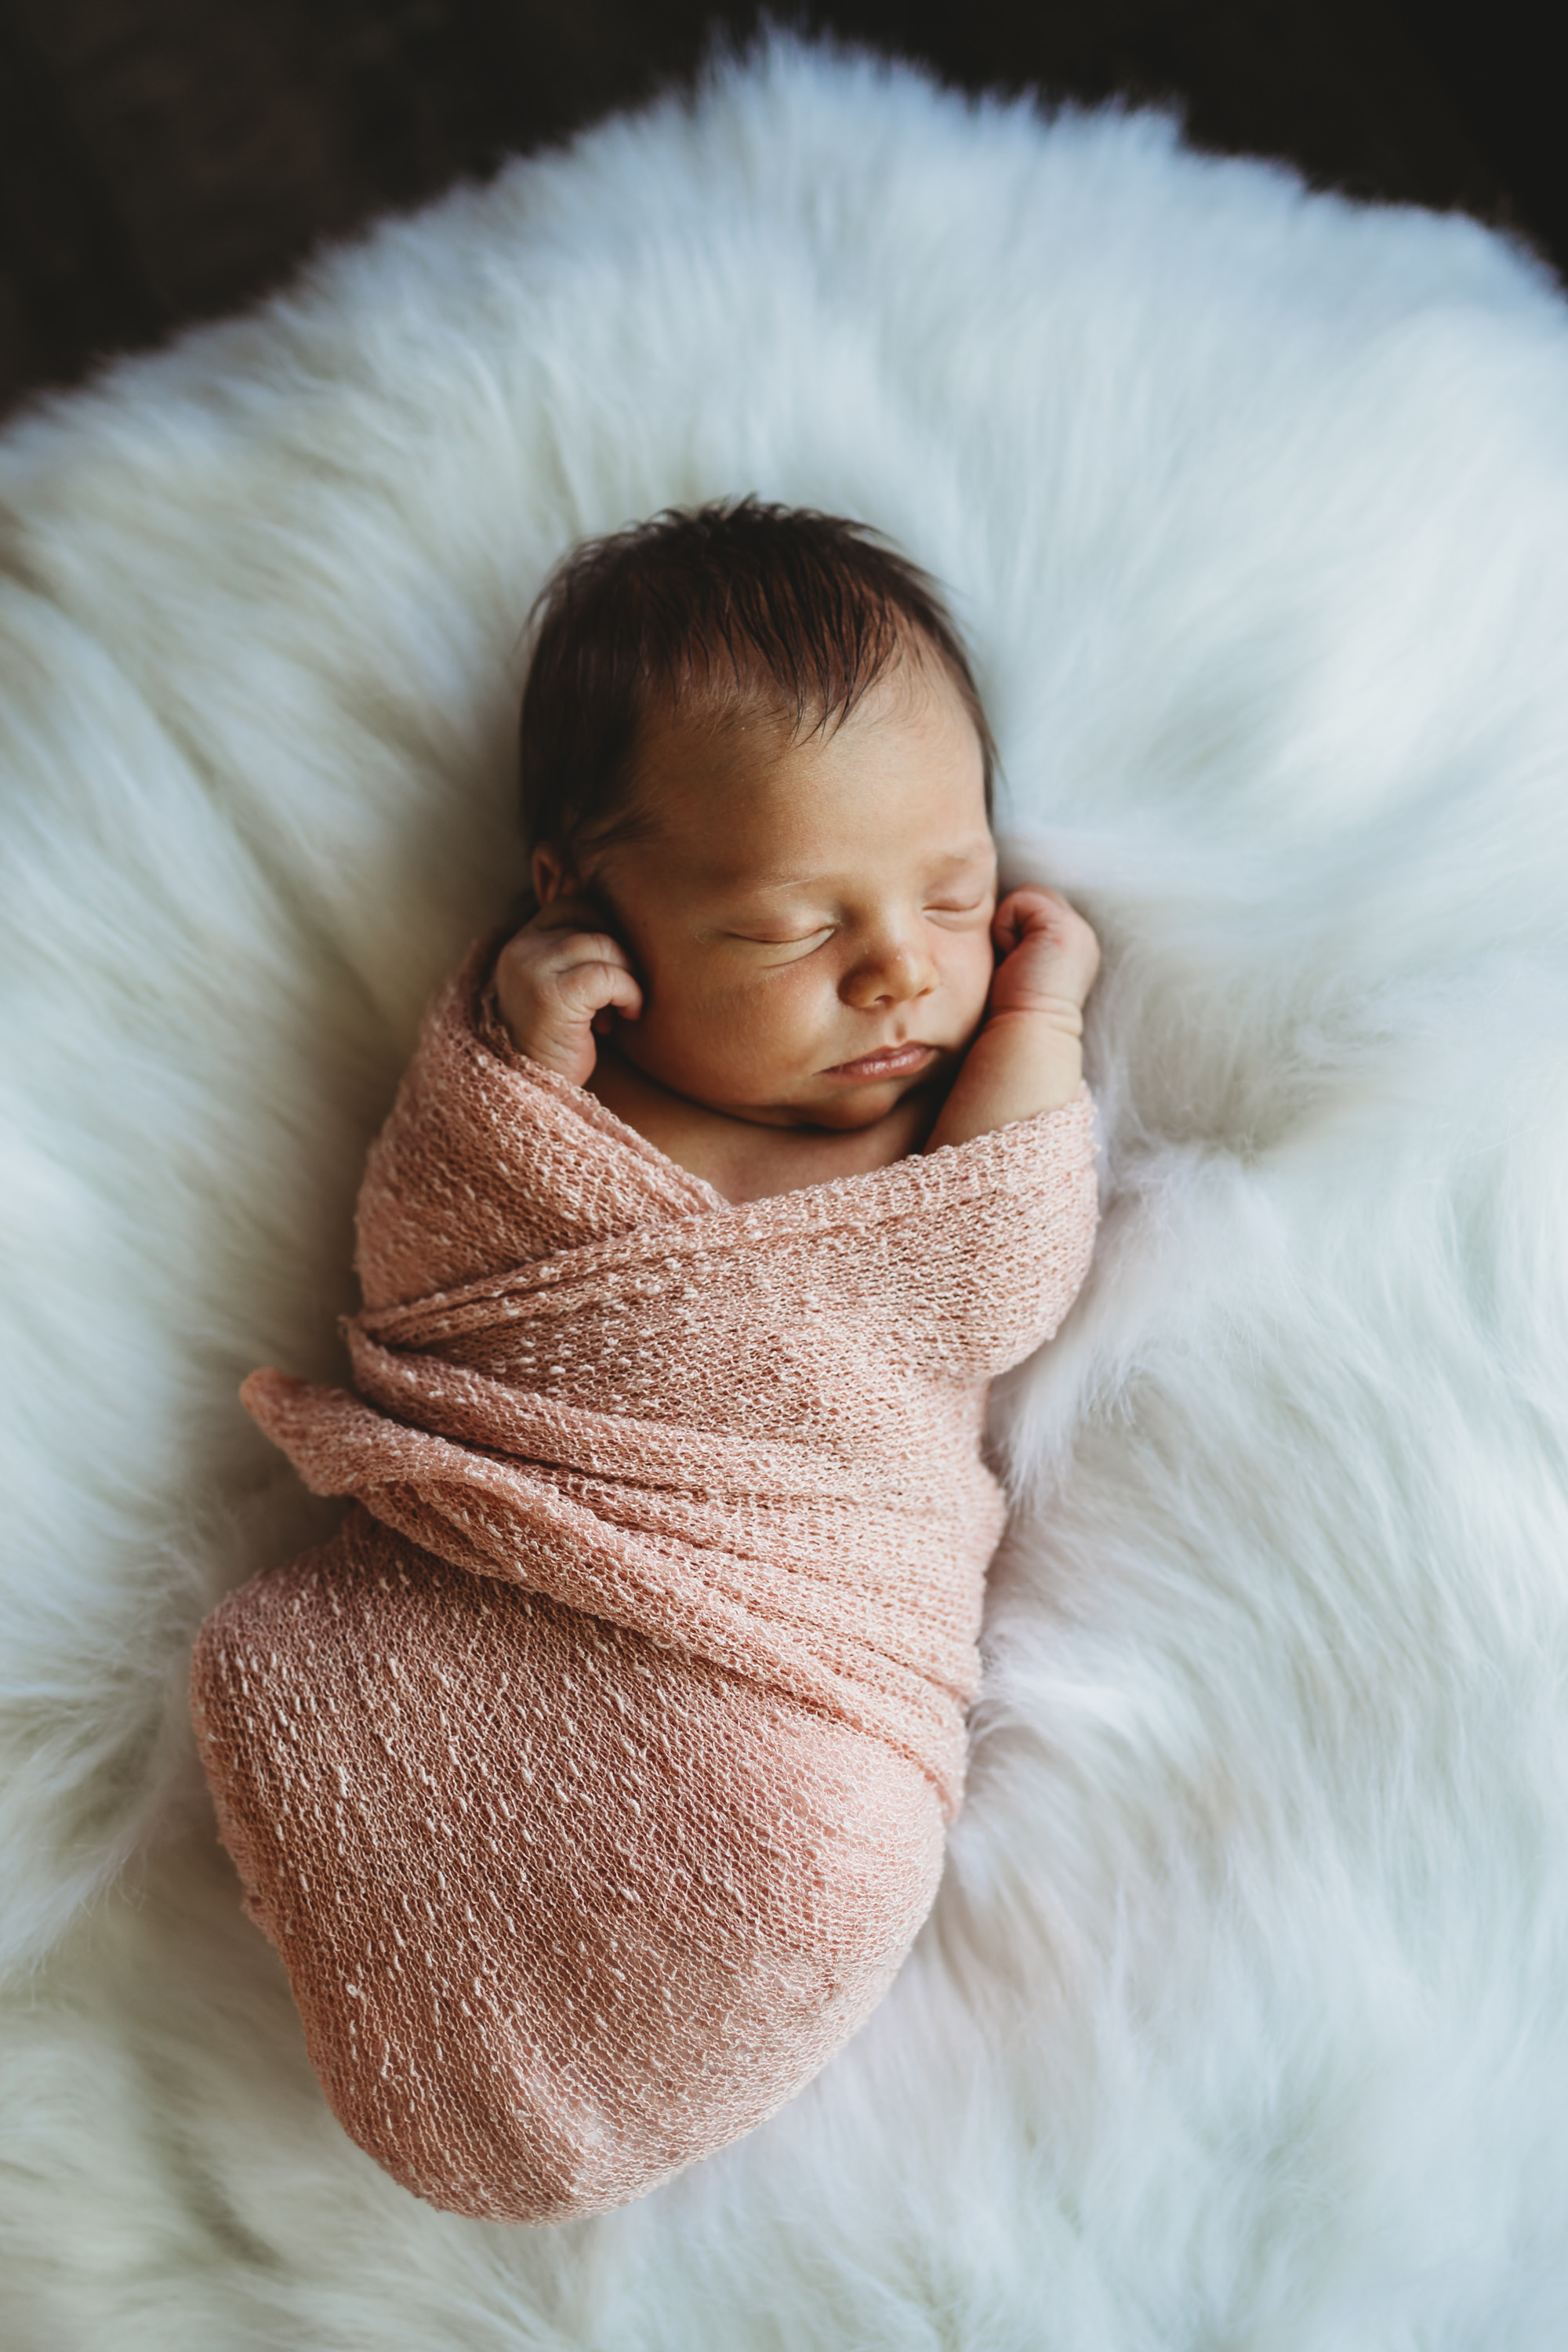 Dundas Newborn Photographer - baby in pink wrap on fluffy white rug